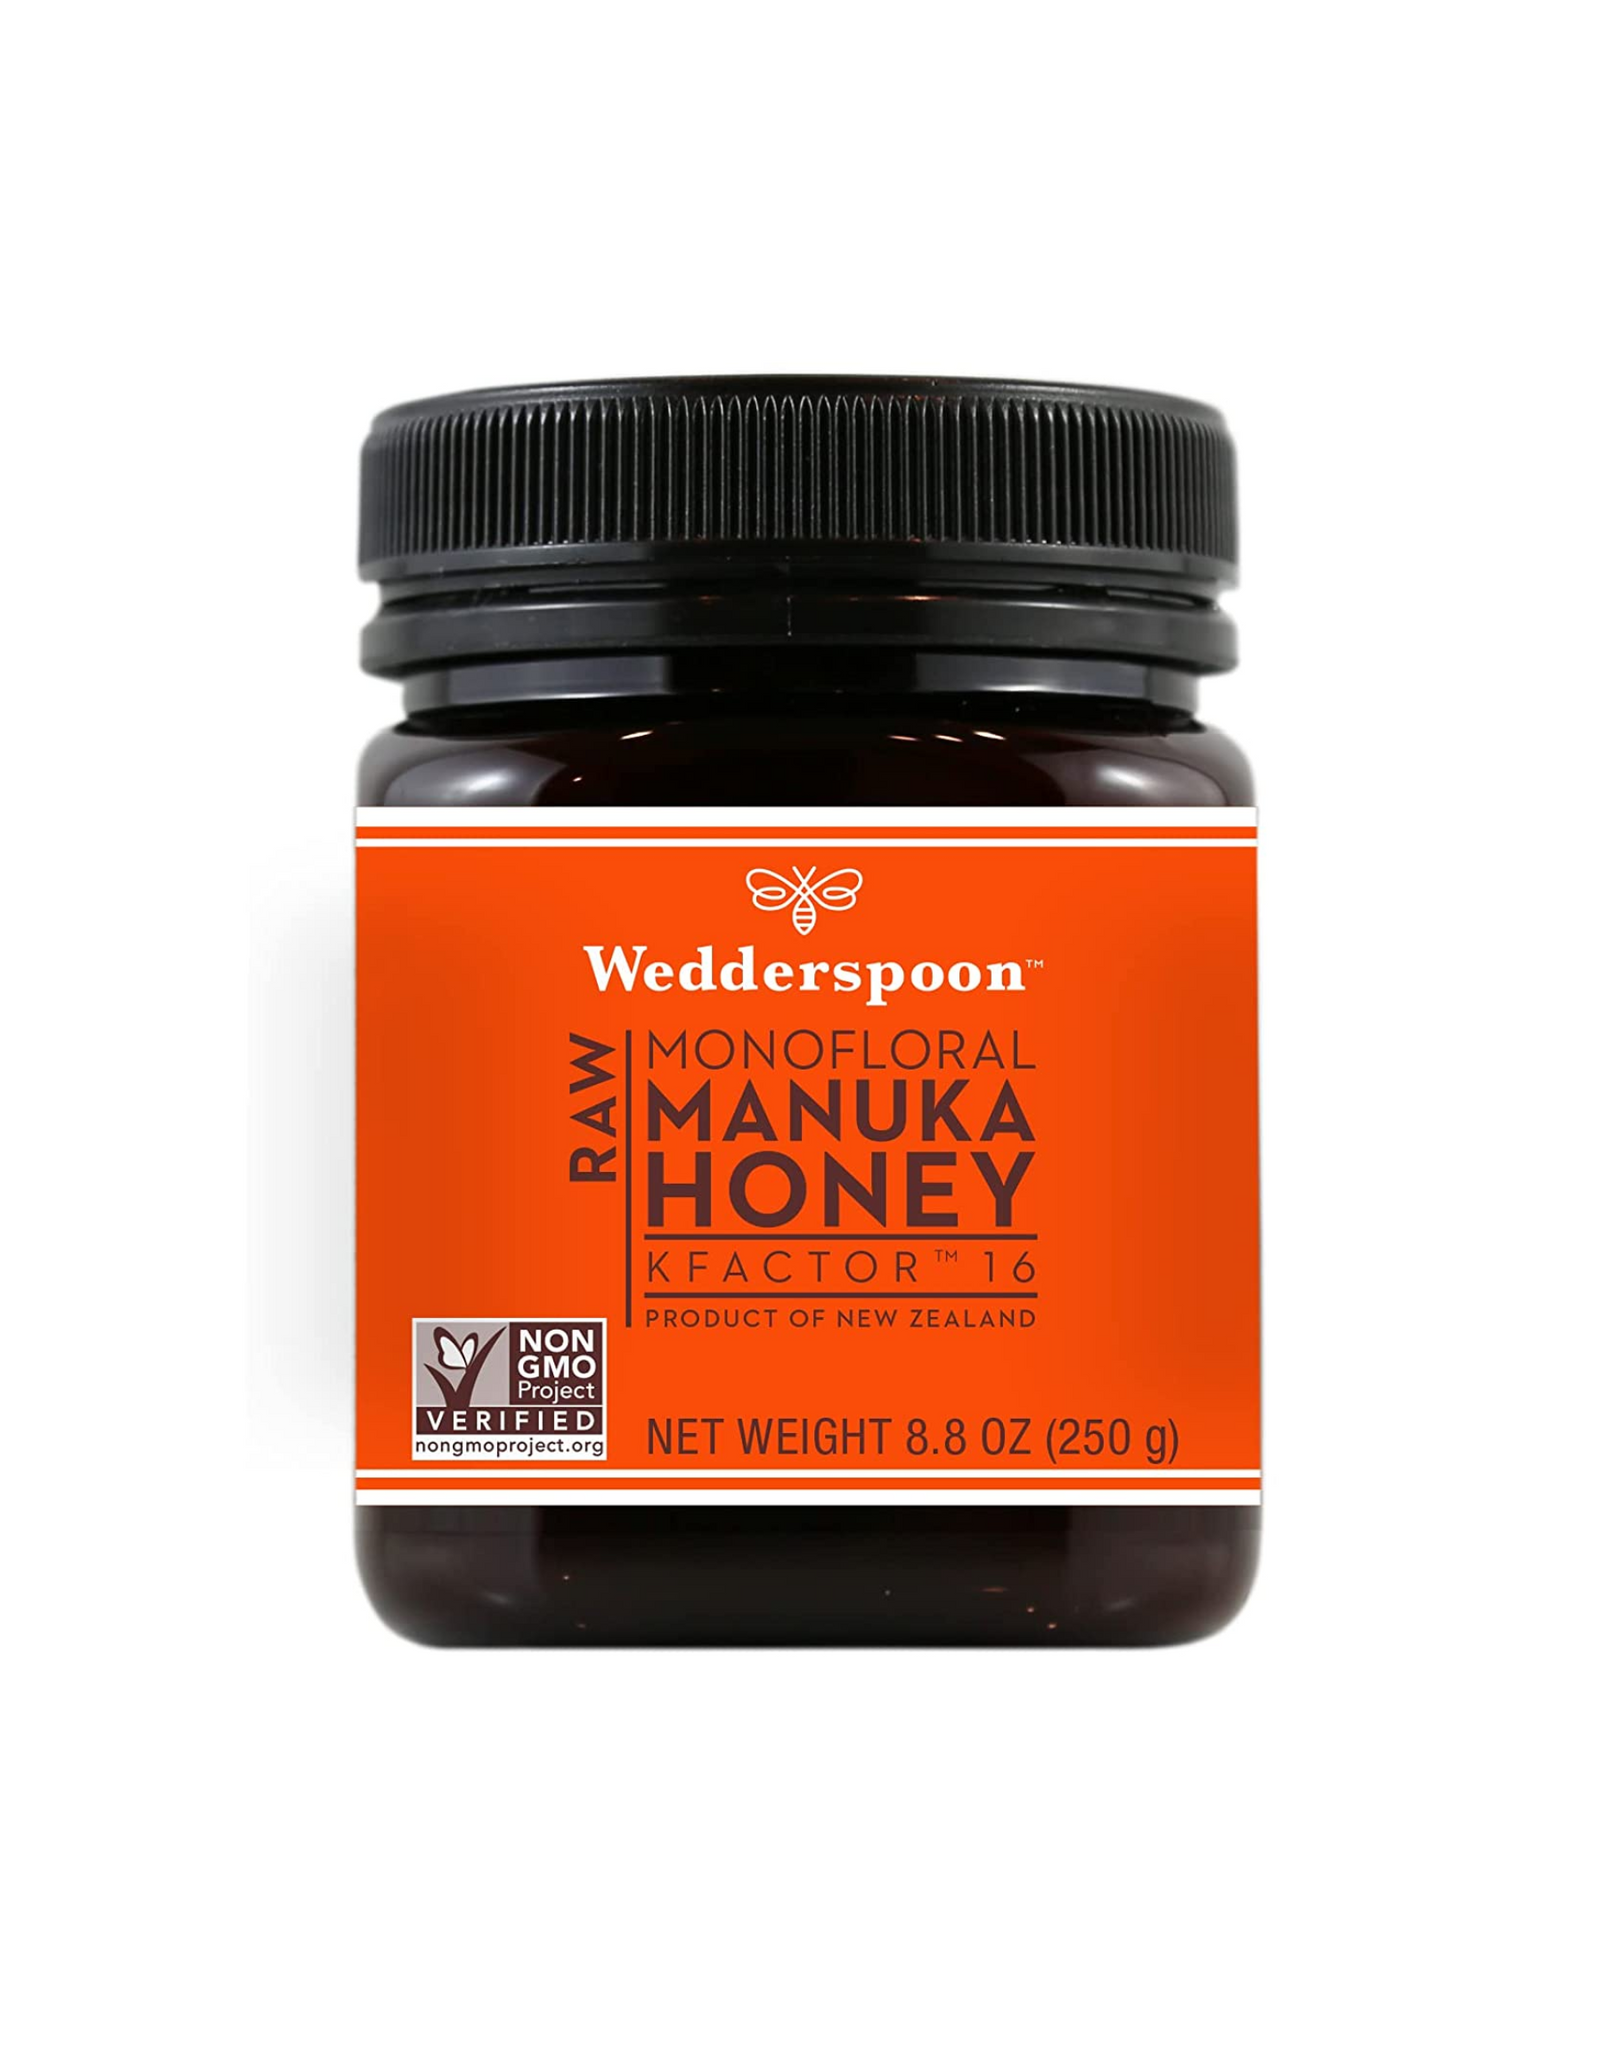 Wedderspoon Raw Premium Manuka Honey, KFactor 16, 8.8 Oz (250 g)